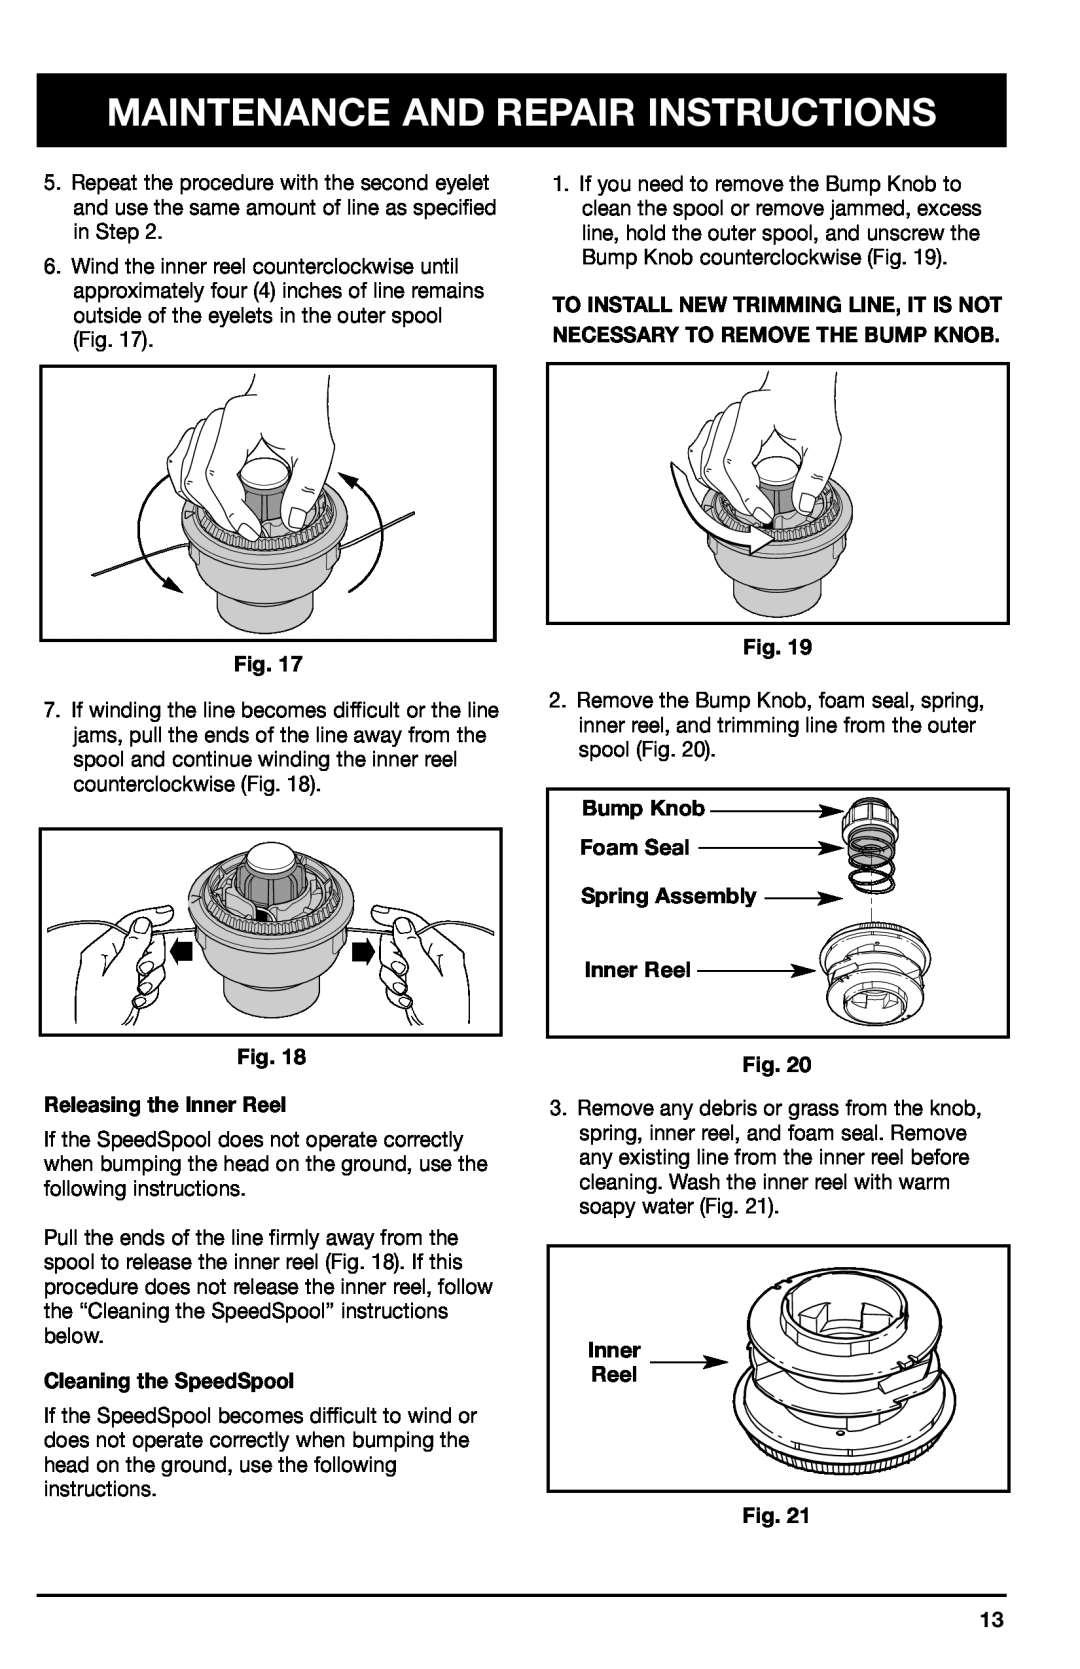 Ryobi 2075r manual Releasing the Inner Reel, Cleaning the SpeedSpool, Bump Knob Foam Seal Spring Assembly Inner Reel 